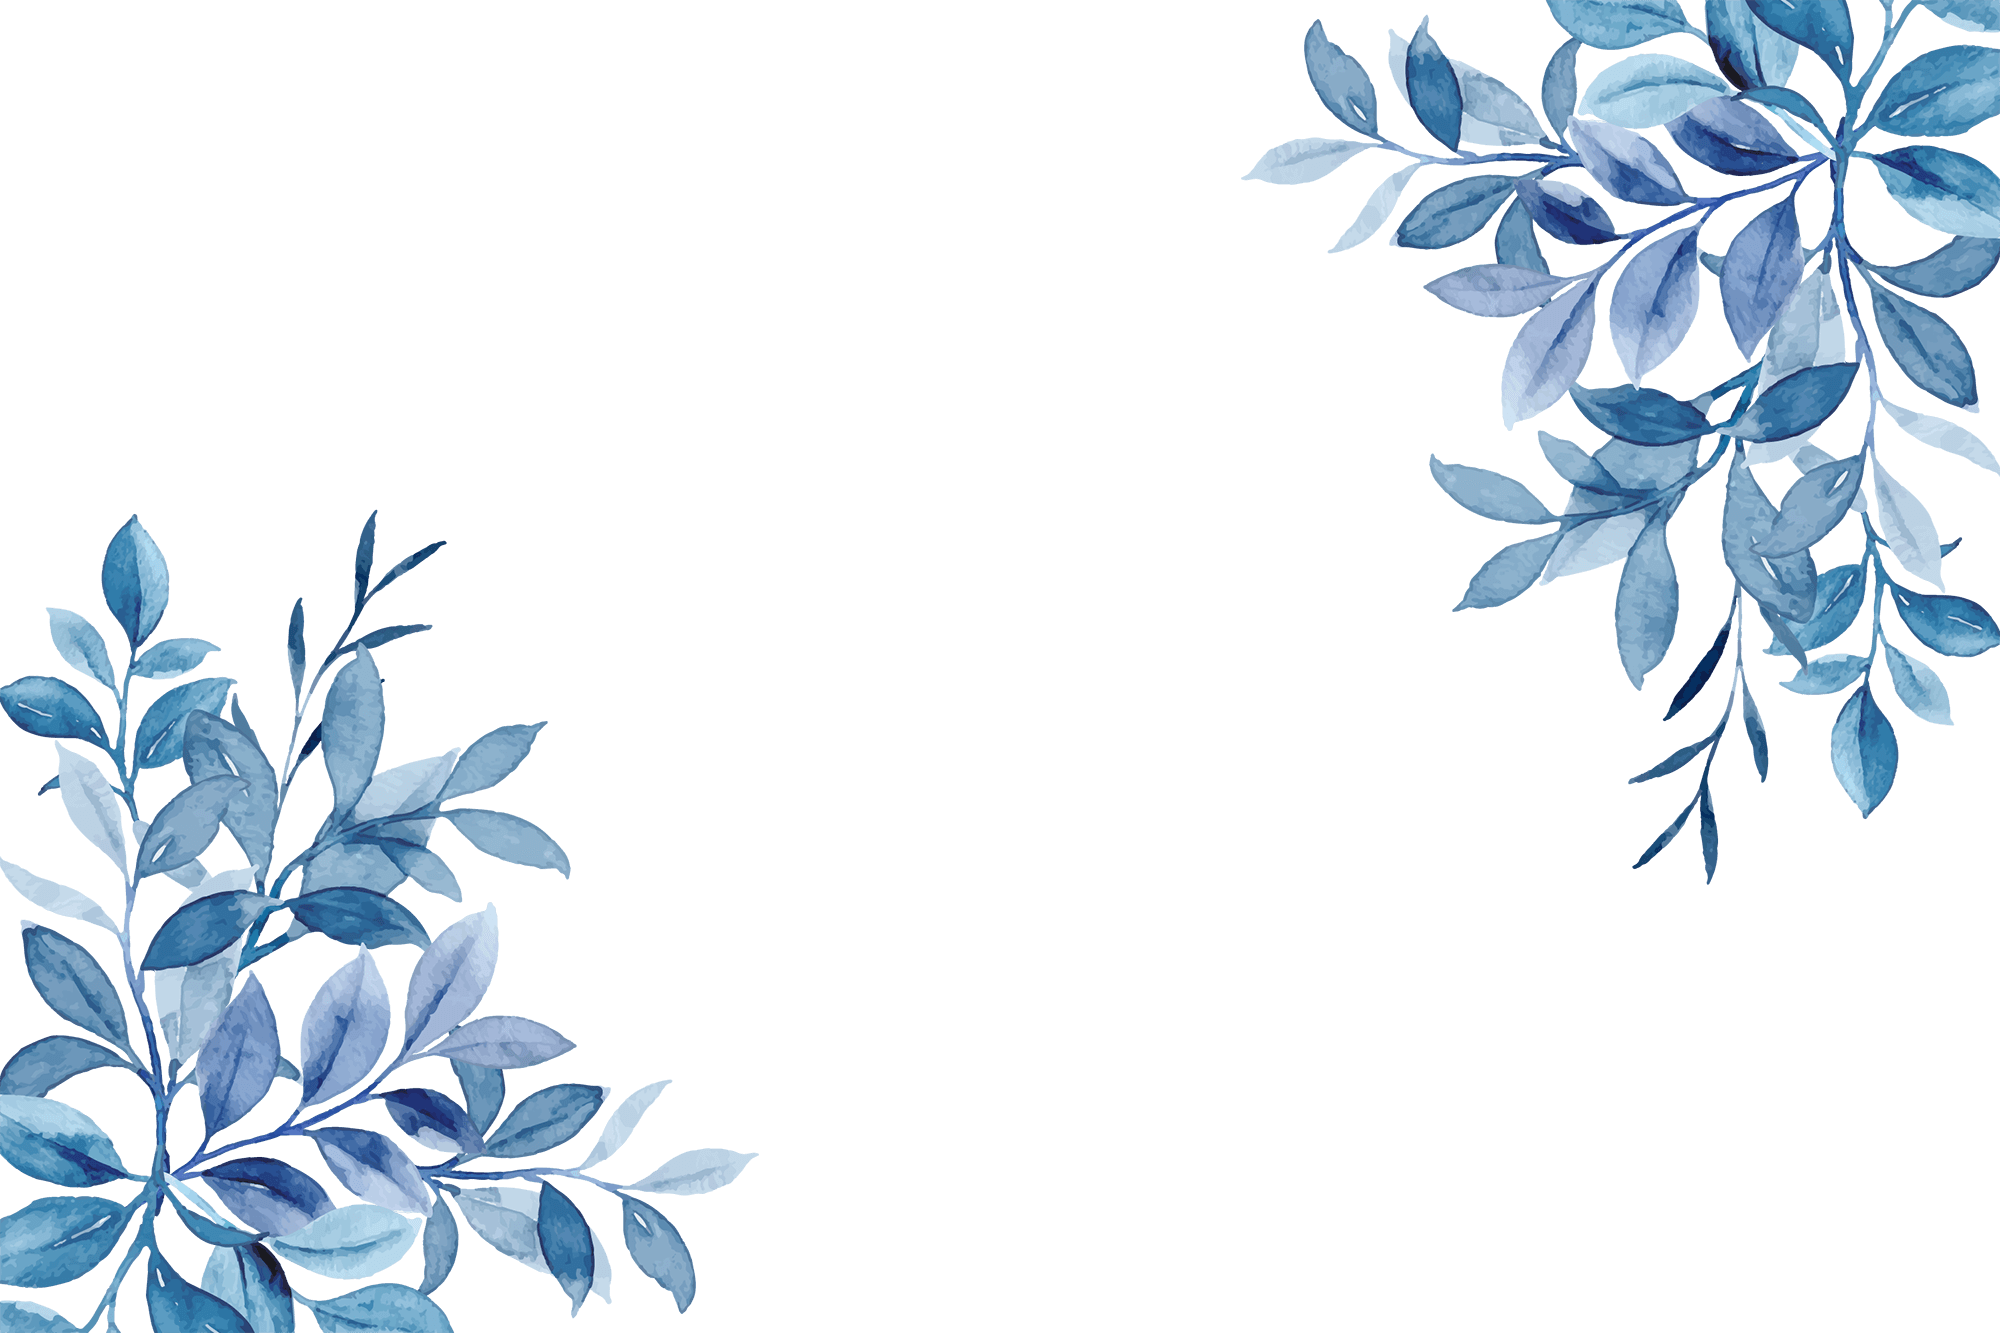 Blue leaves background vector Vector flower PNG image download free